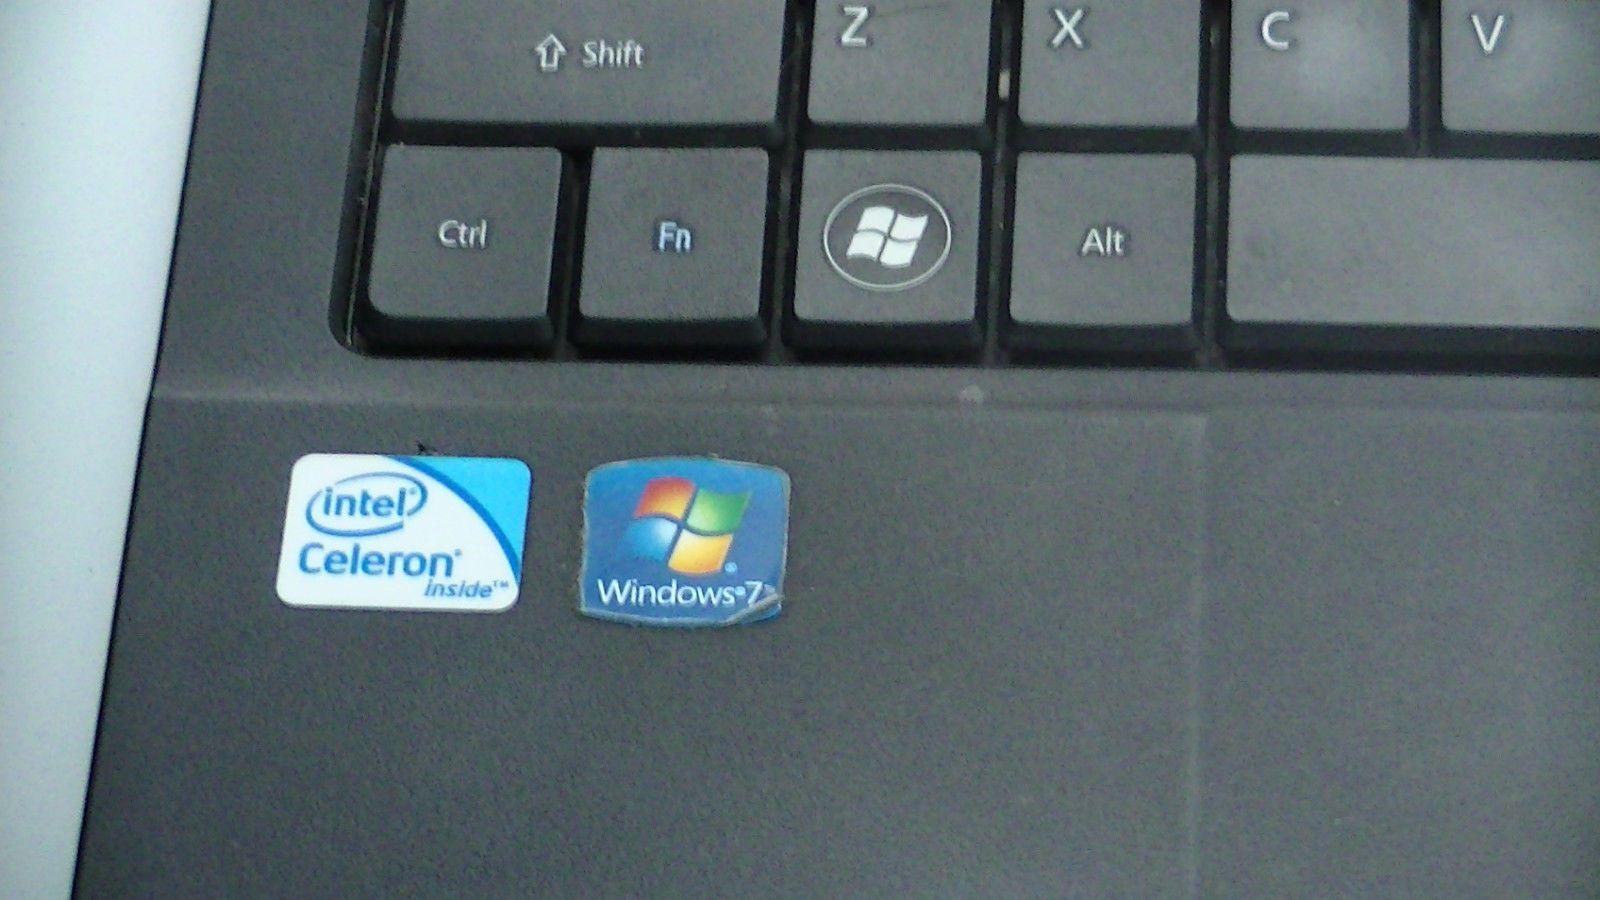 Intel Celeron Logo - EMachines EME527 2537 15.6in. 160GB, Intel Celeron 2.2GHz, 2GB